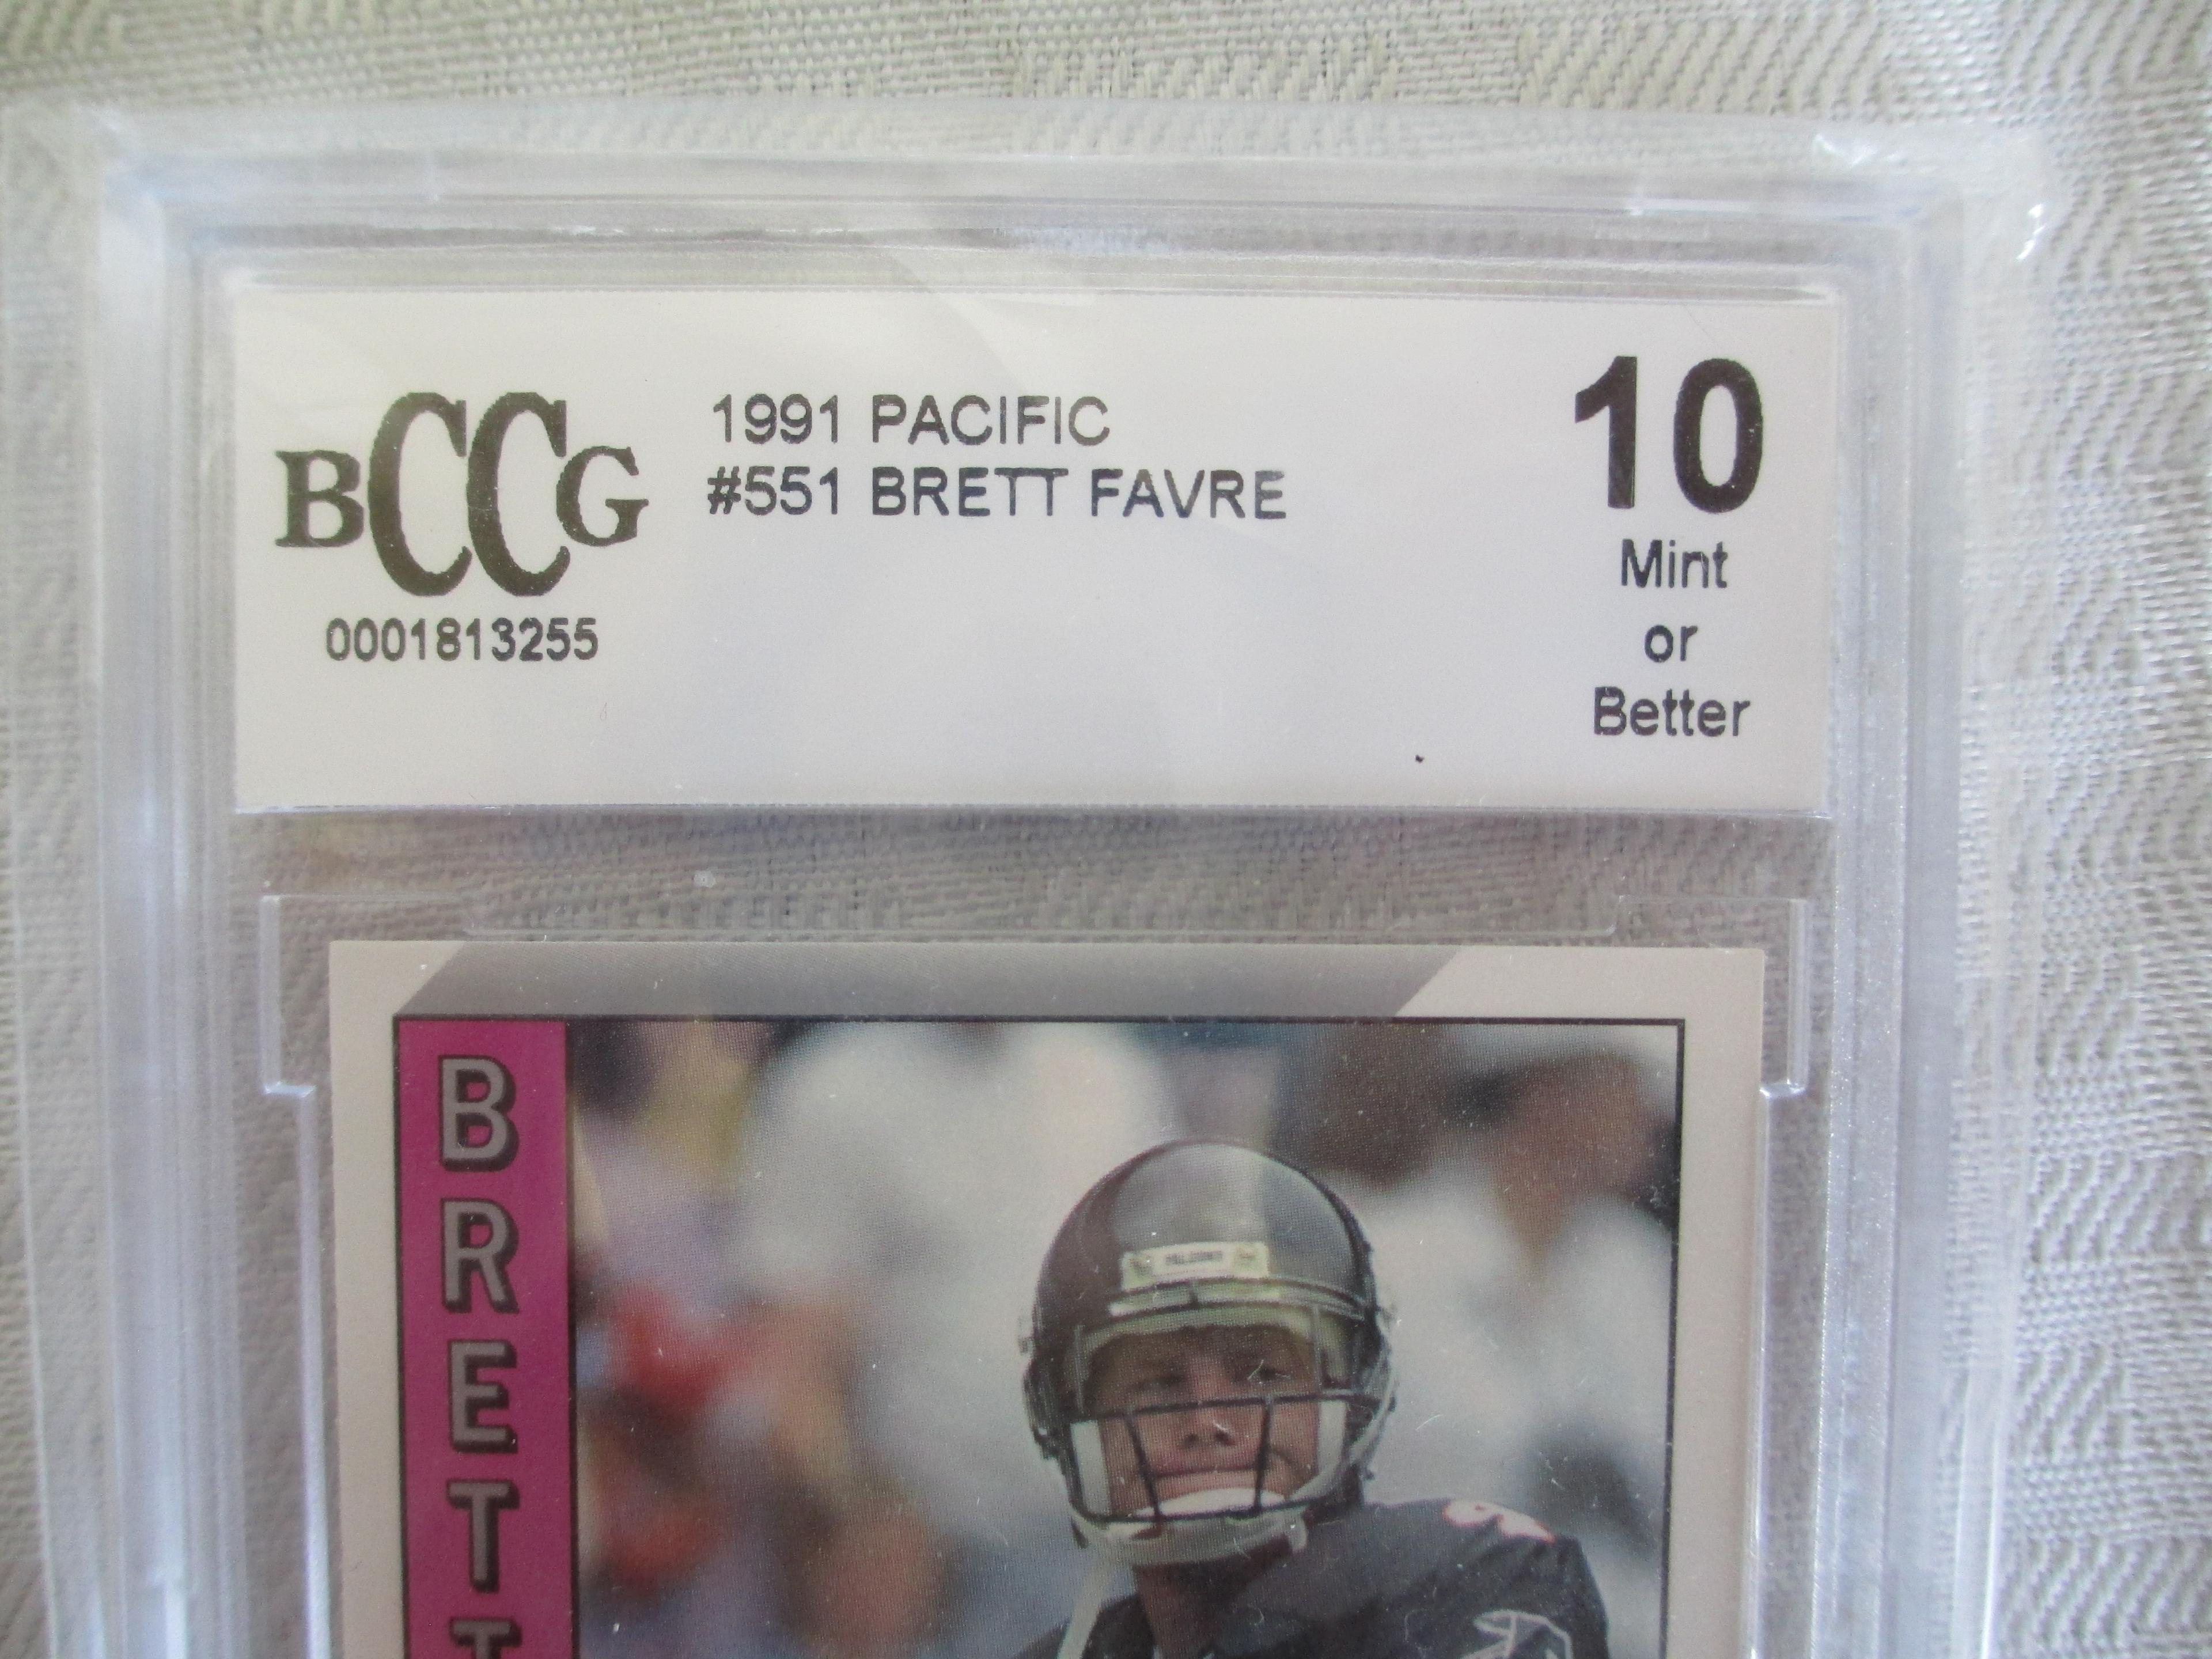 Brett Favre 1991 Pacific #551 Rookie Card BCCG 10